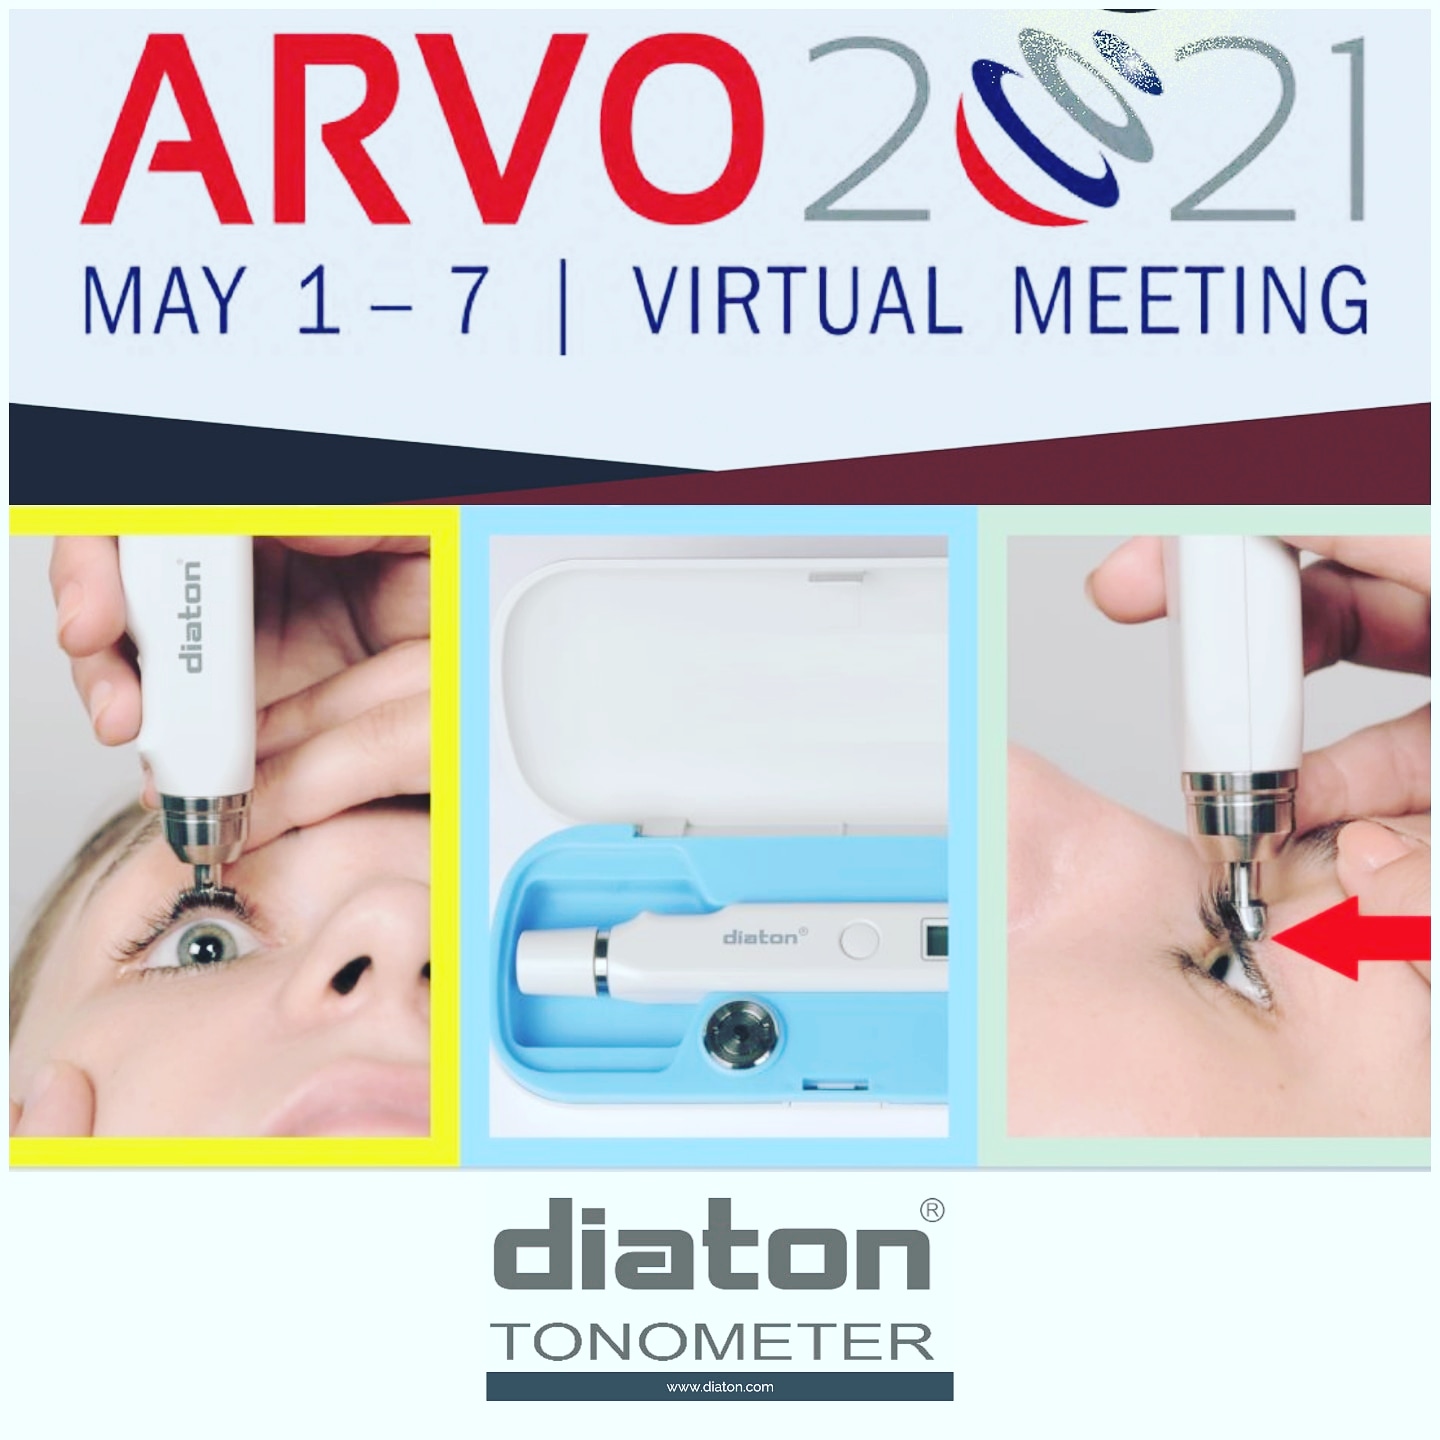 Unique Transpalpebral & Scleral Diaton tonometer at ARVO 2021 Virtual Meeting